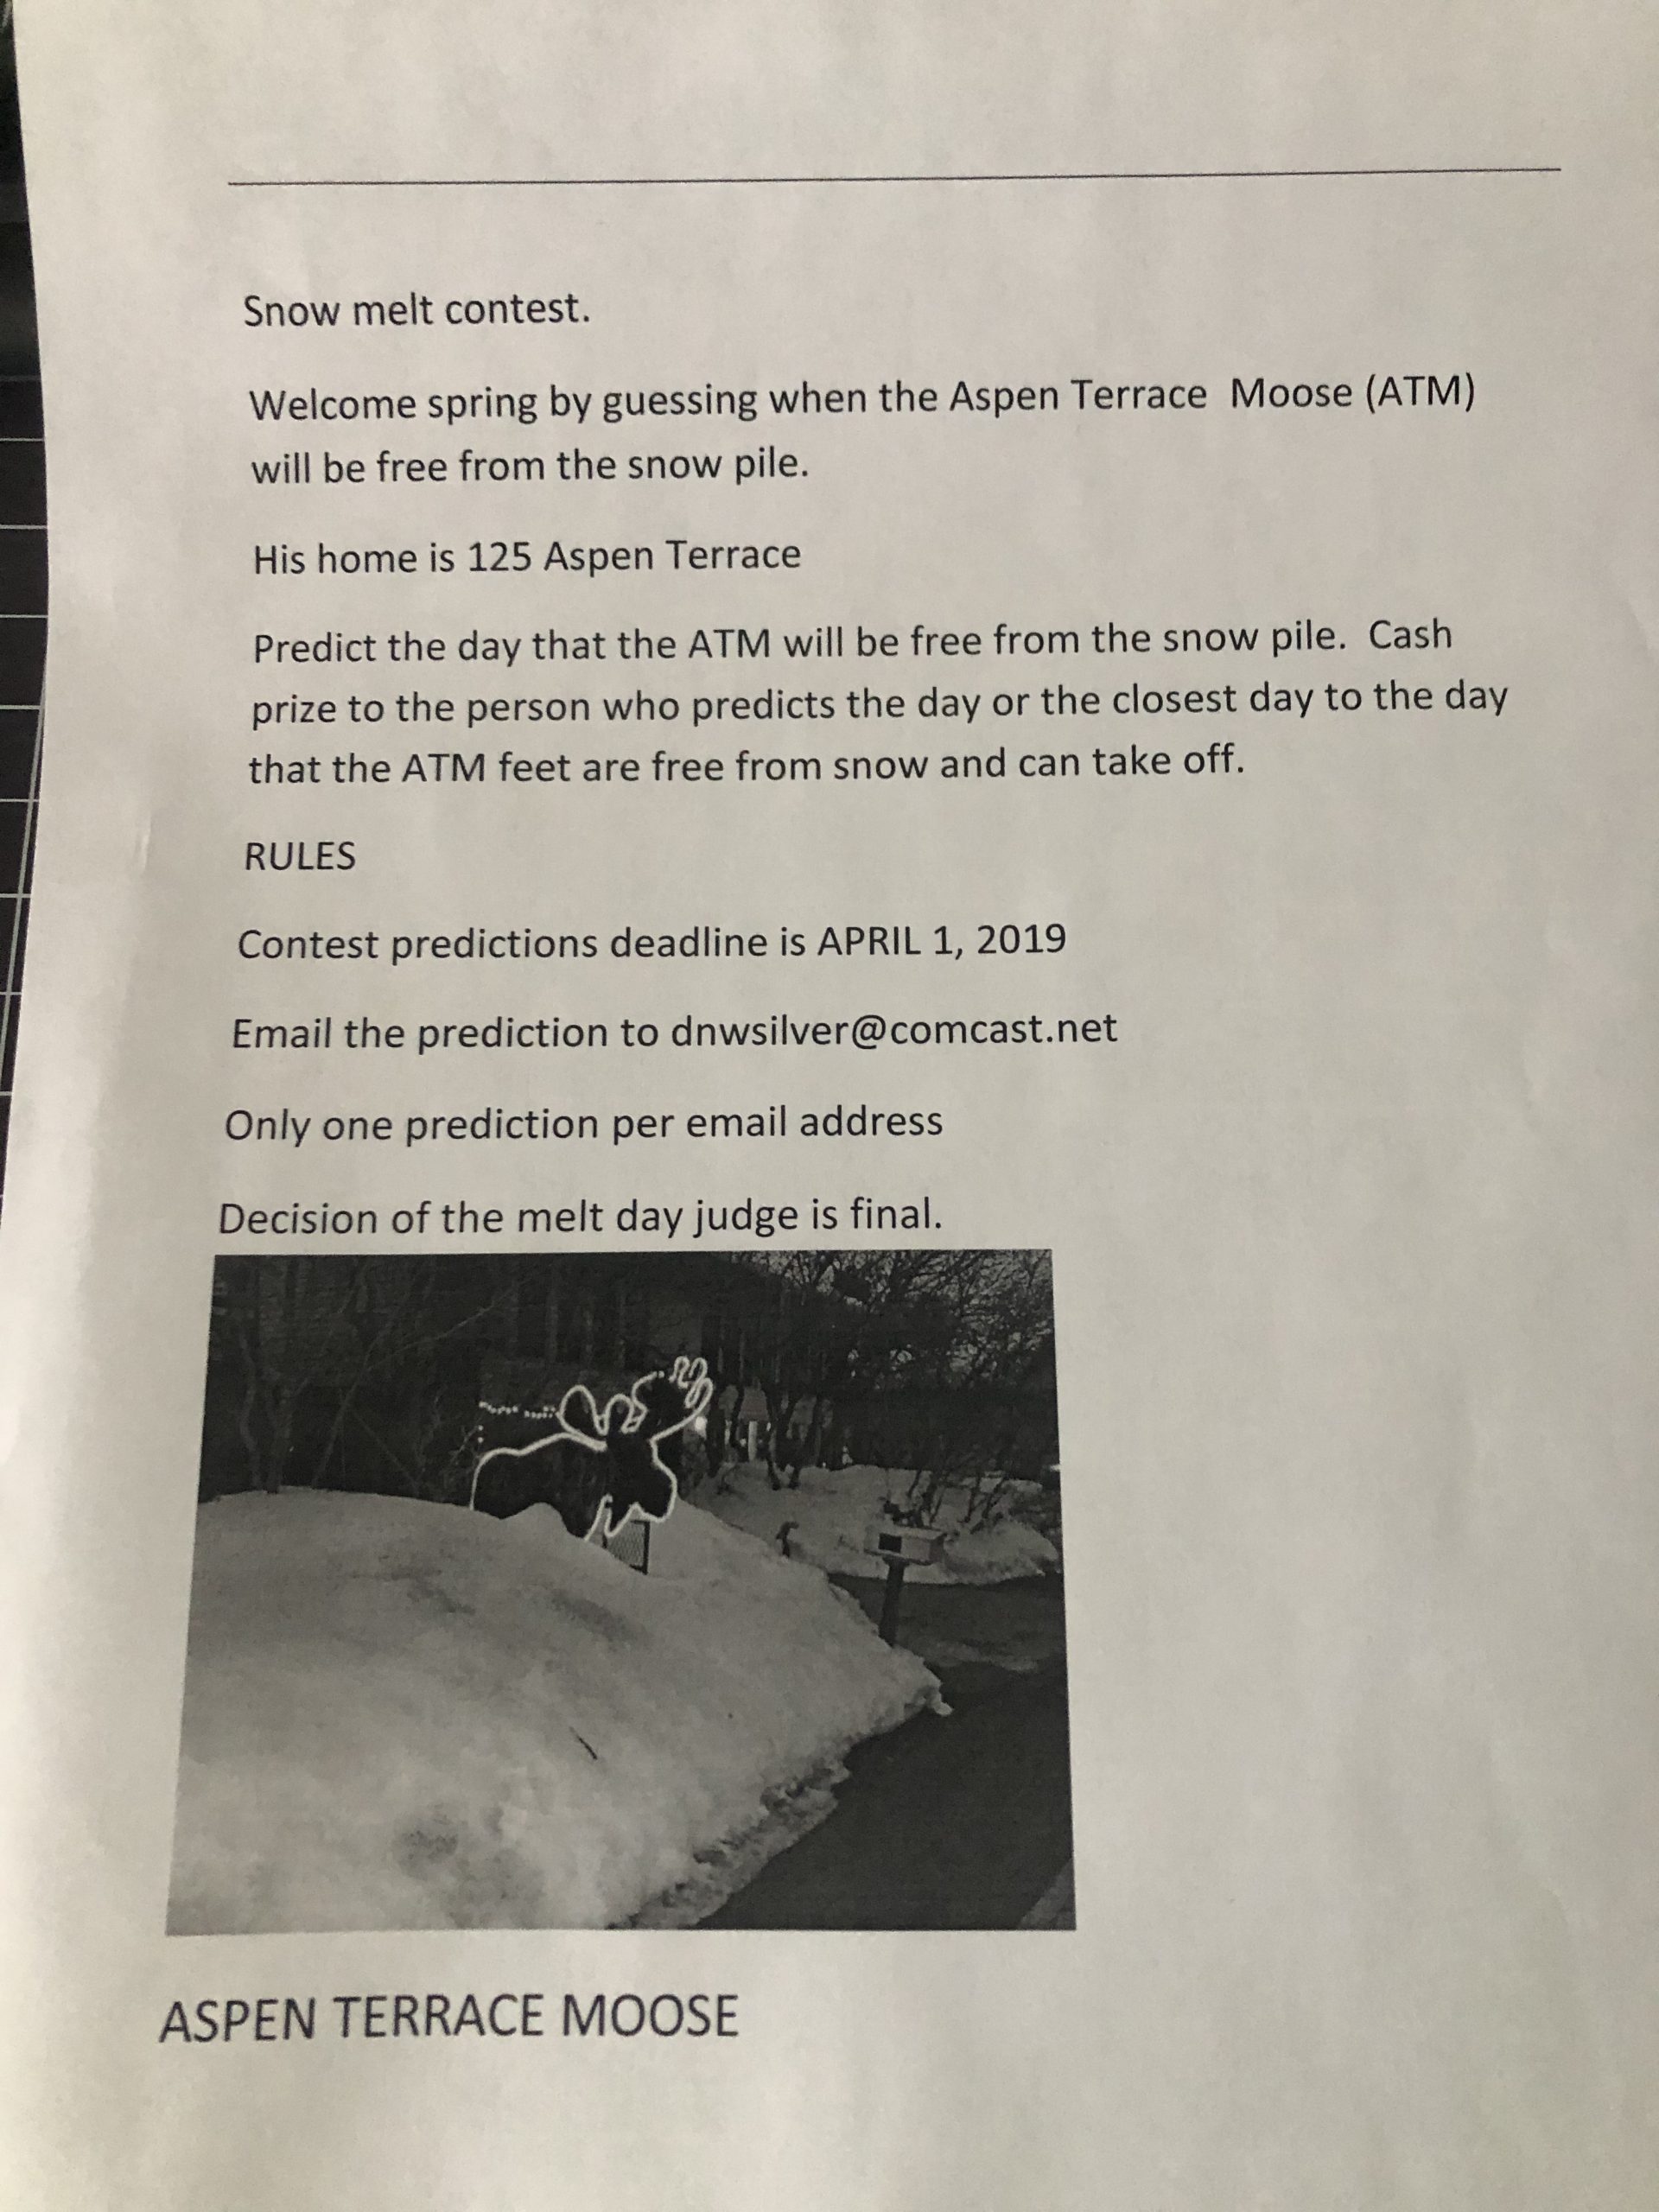 Summit Park Snow Melt Contest